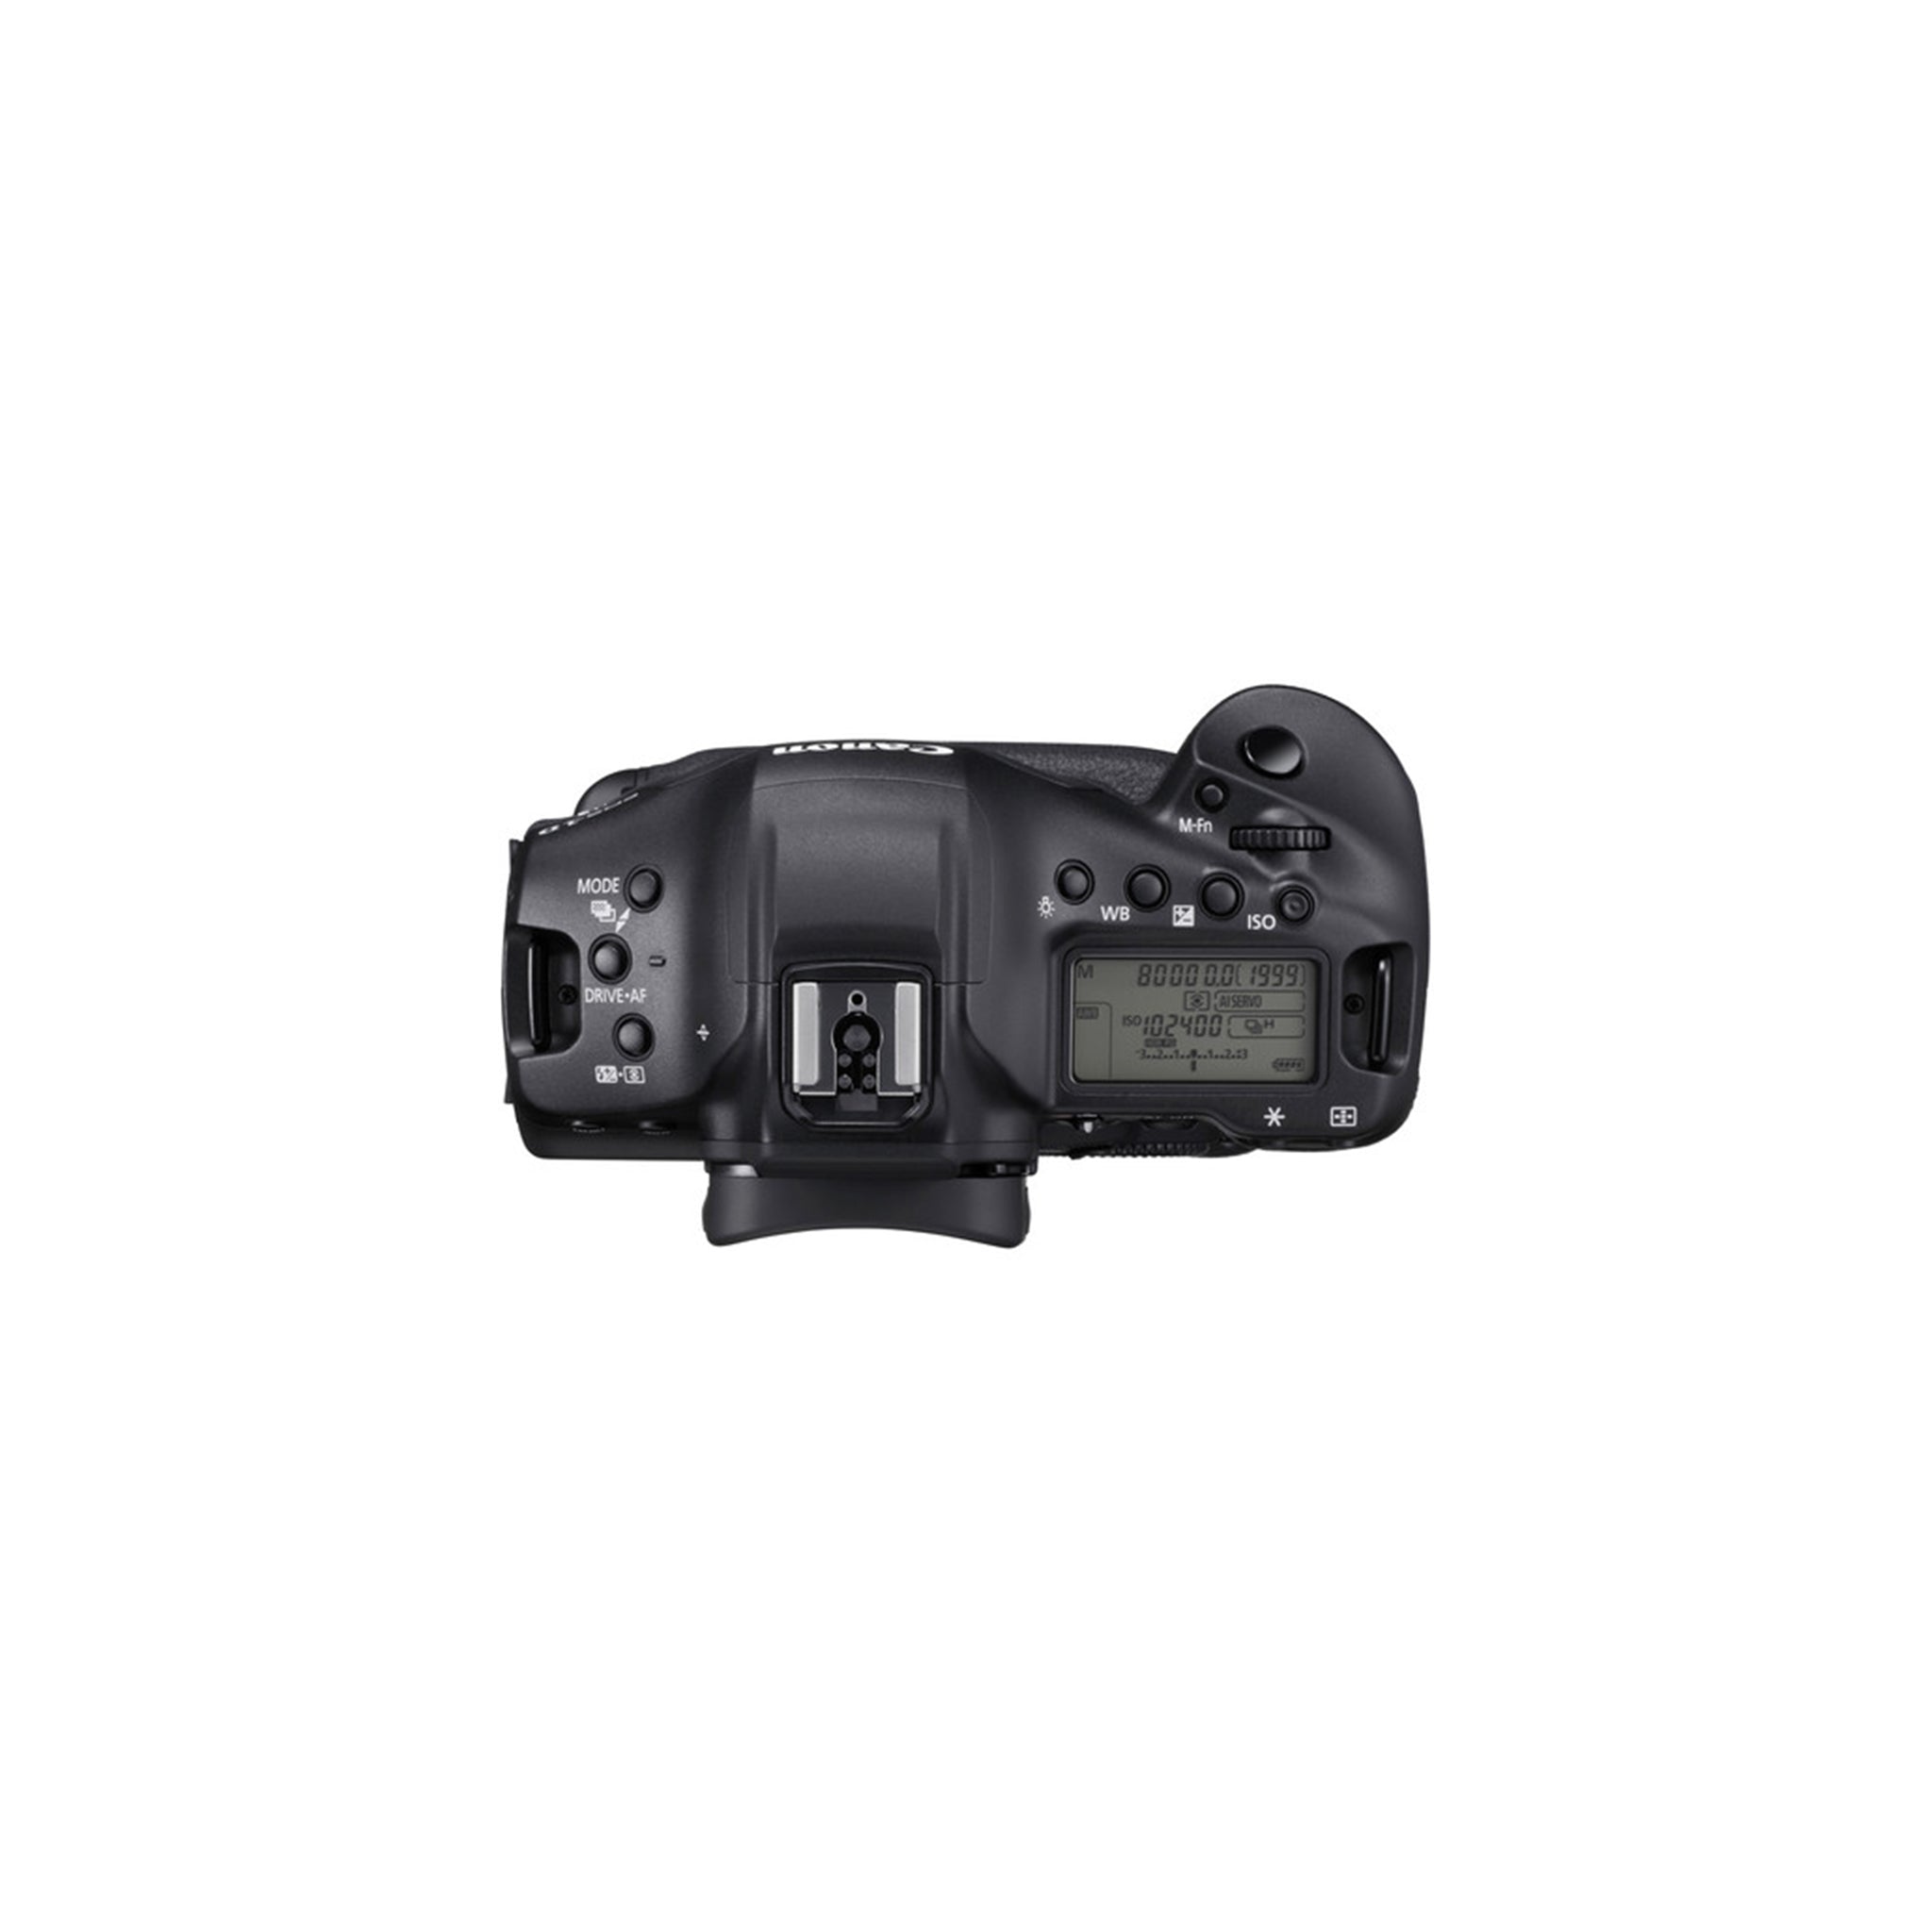 Canon EOS 1DX Mk III Camera